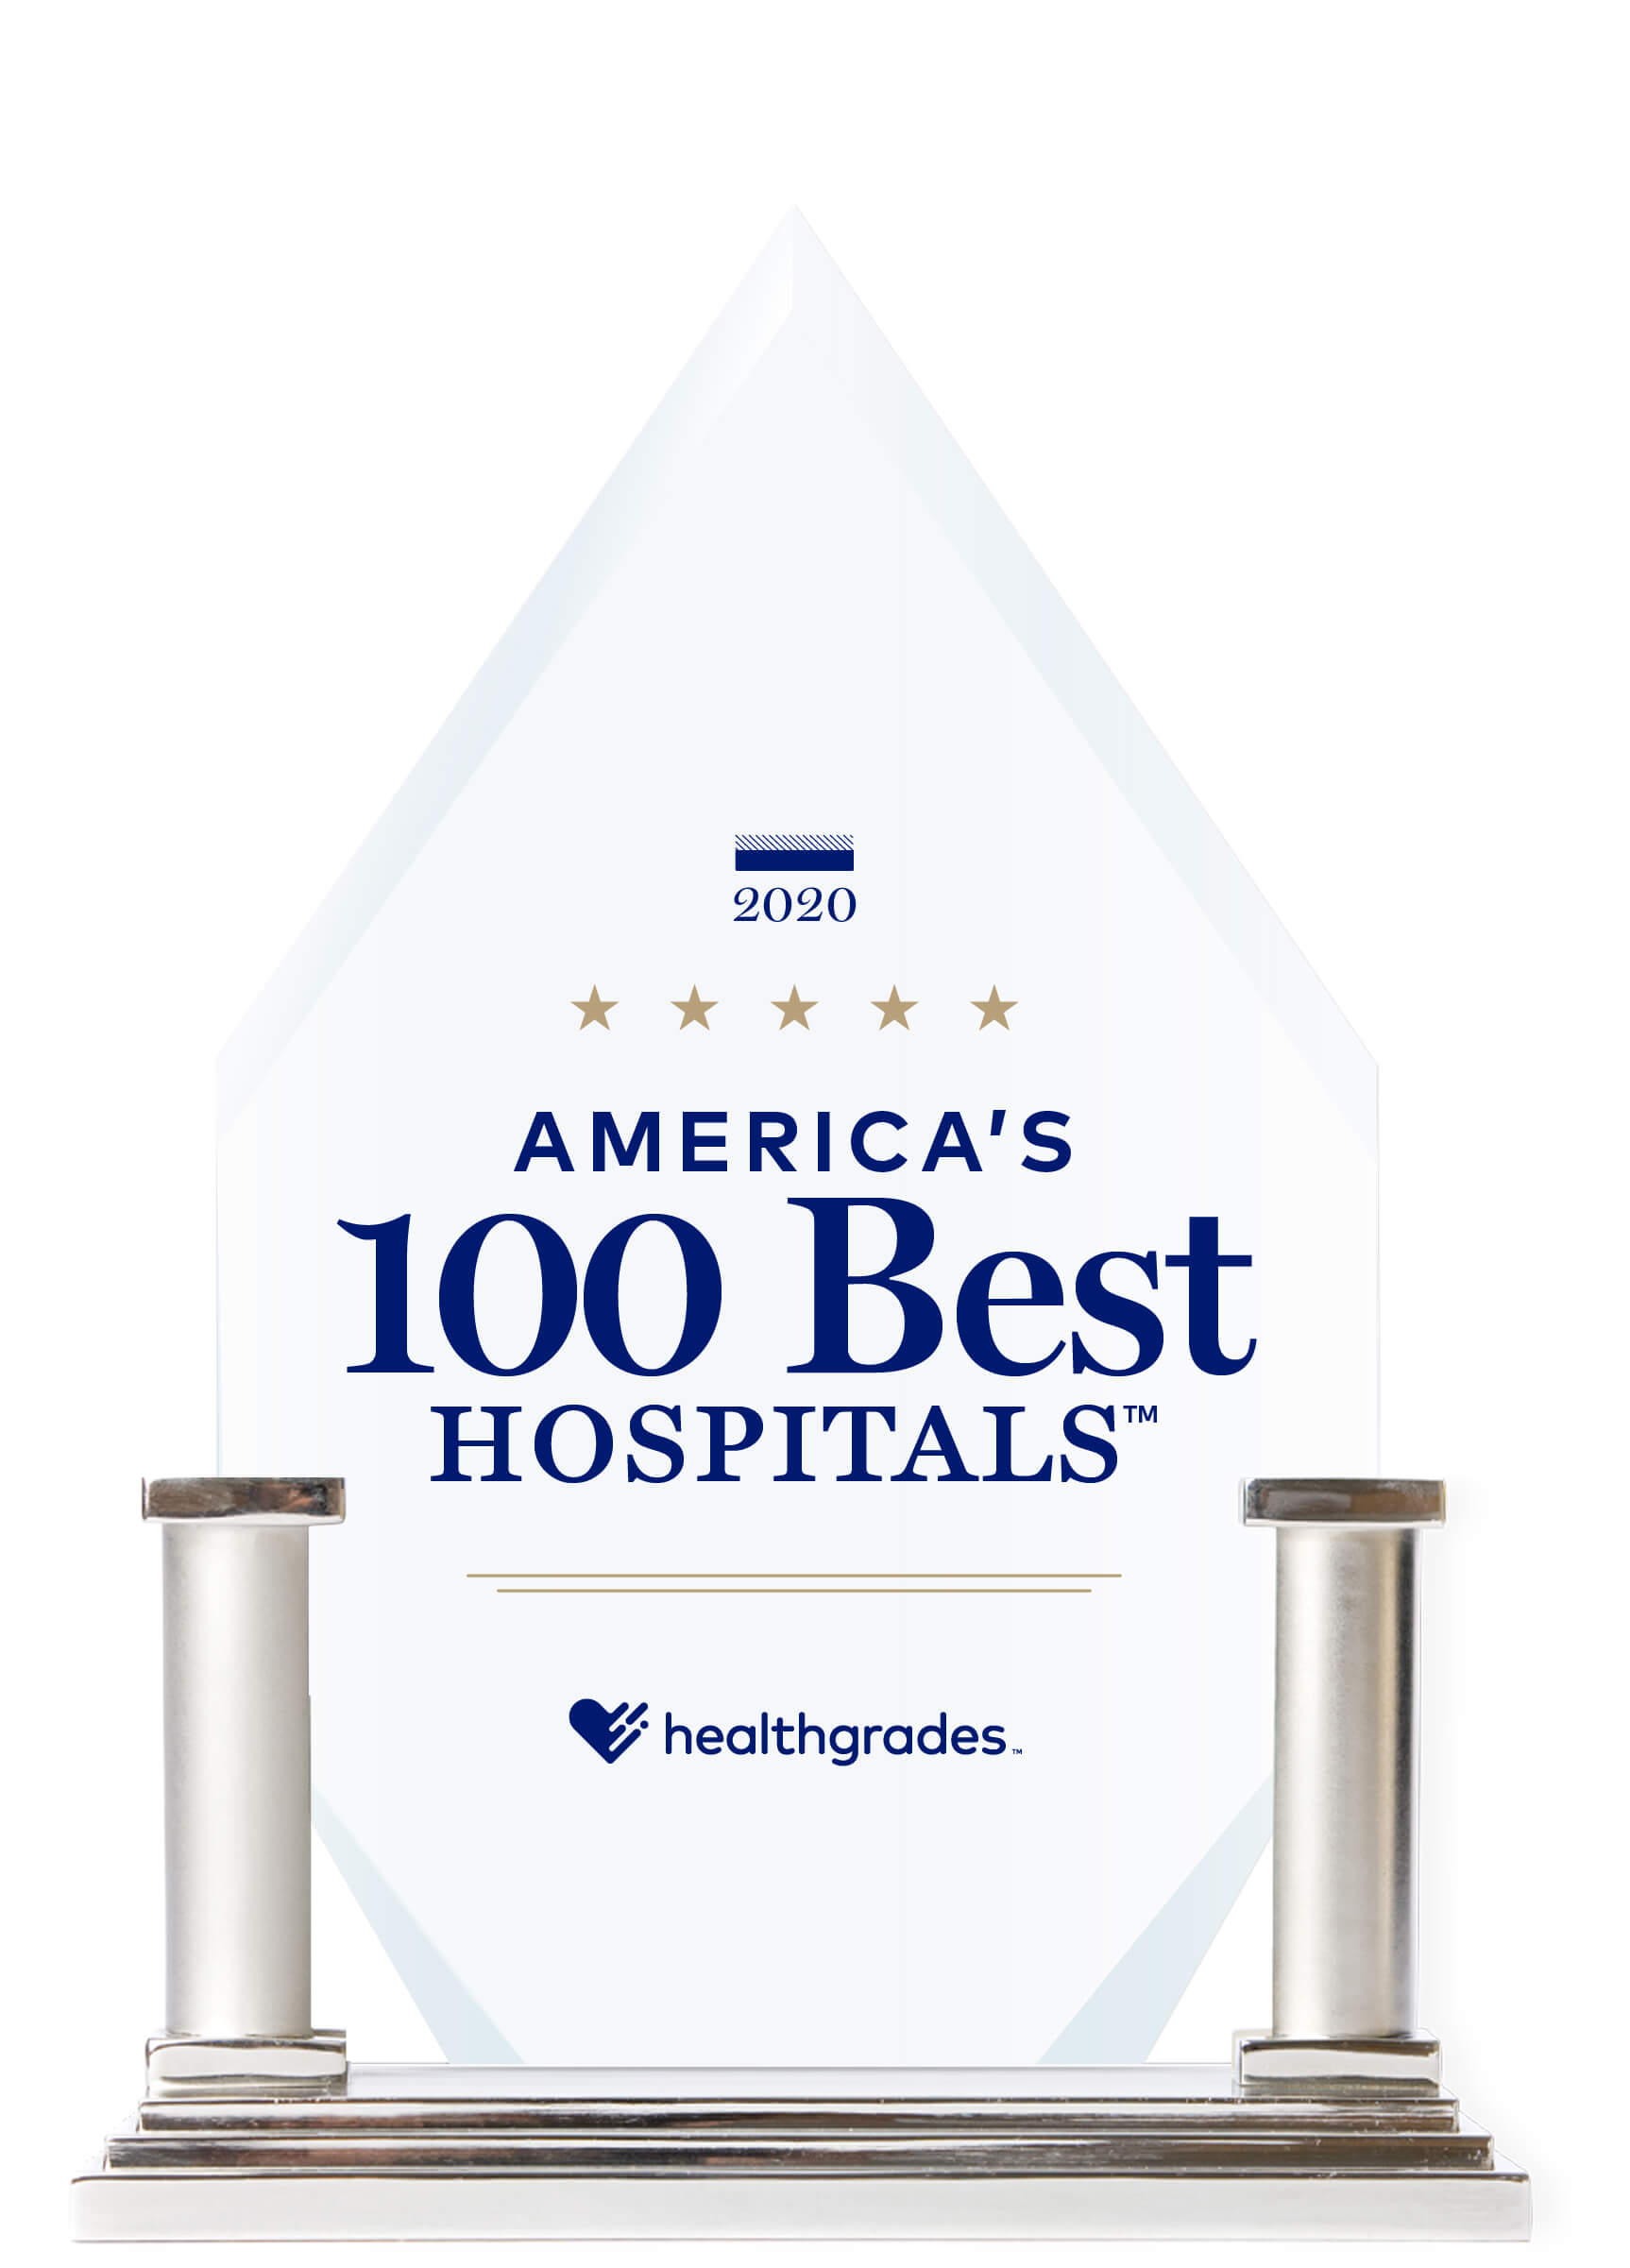 Healthgrades America's 100 Best Hospitals Trophy 2020